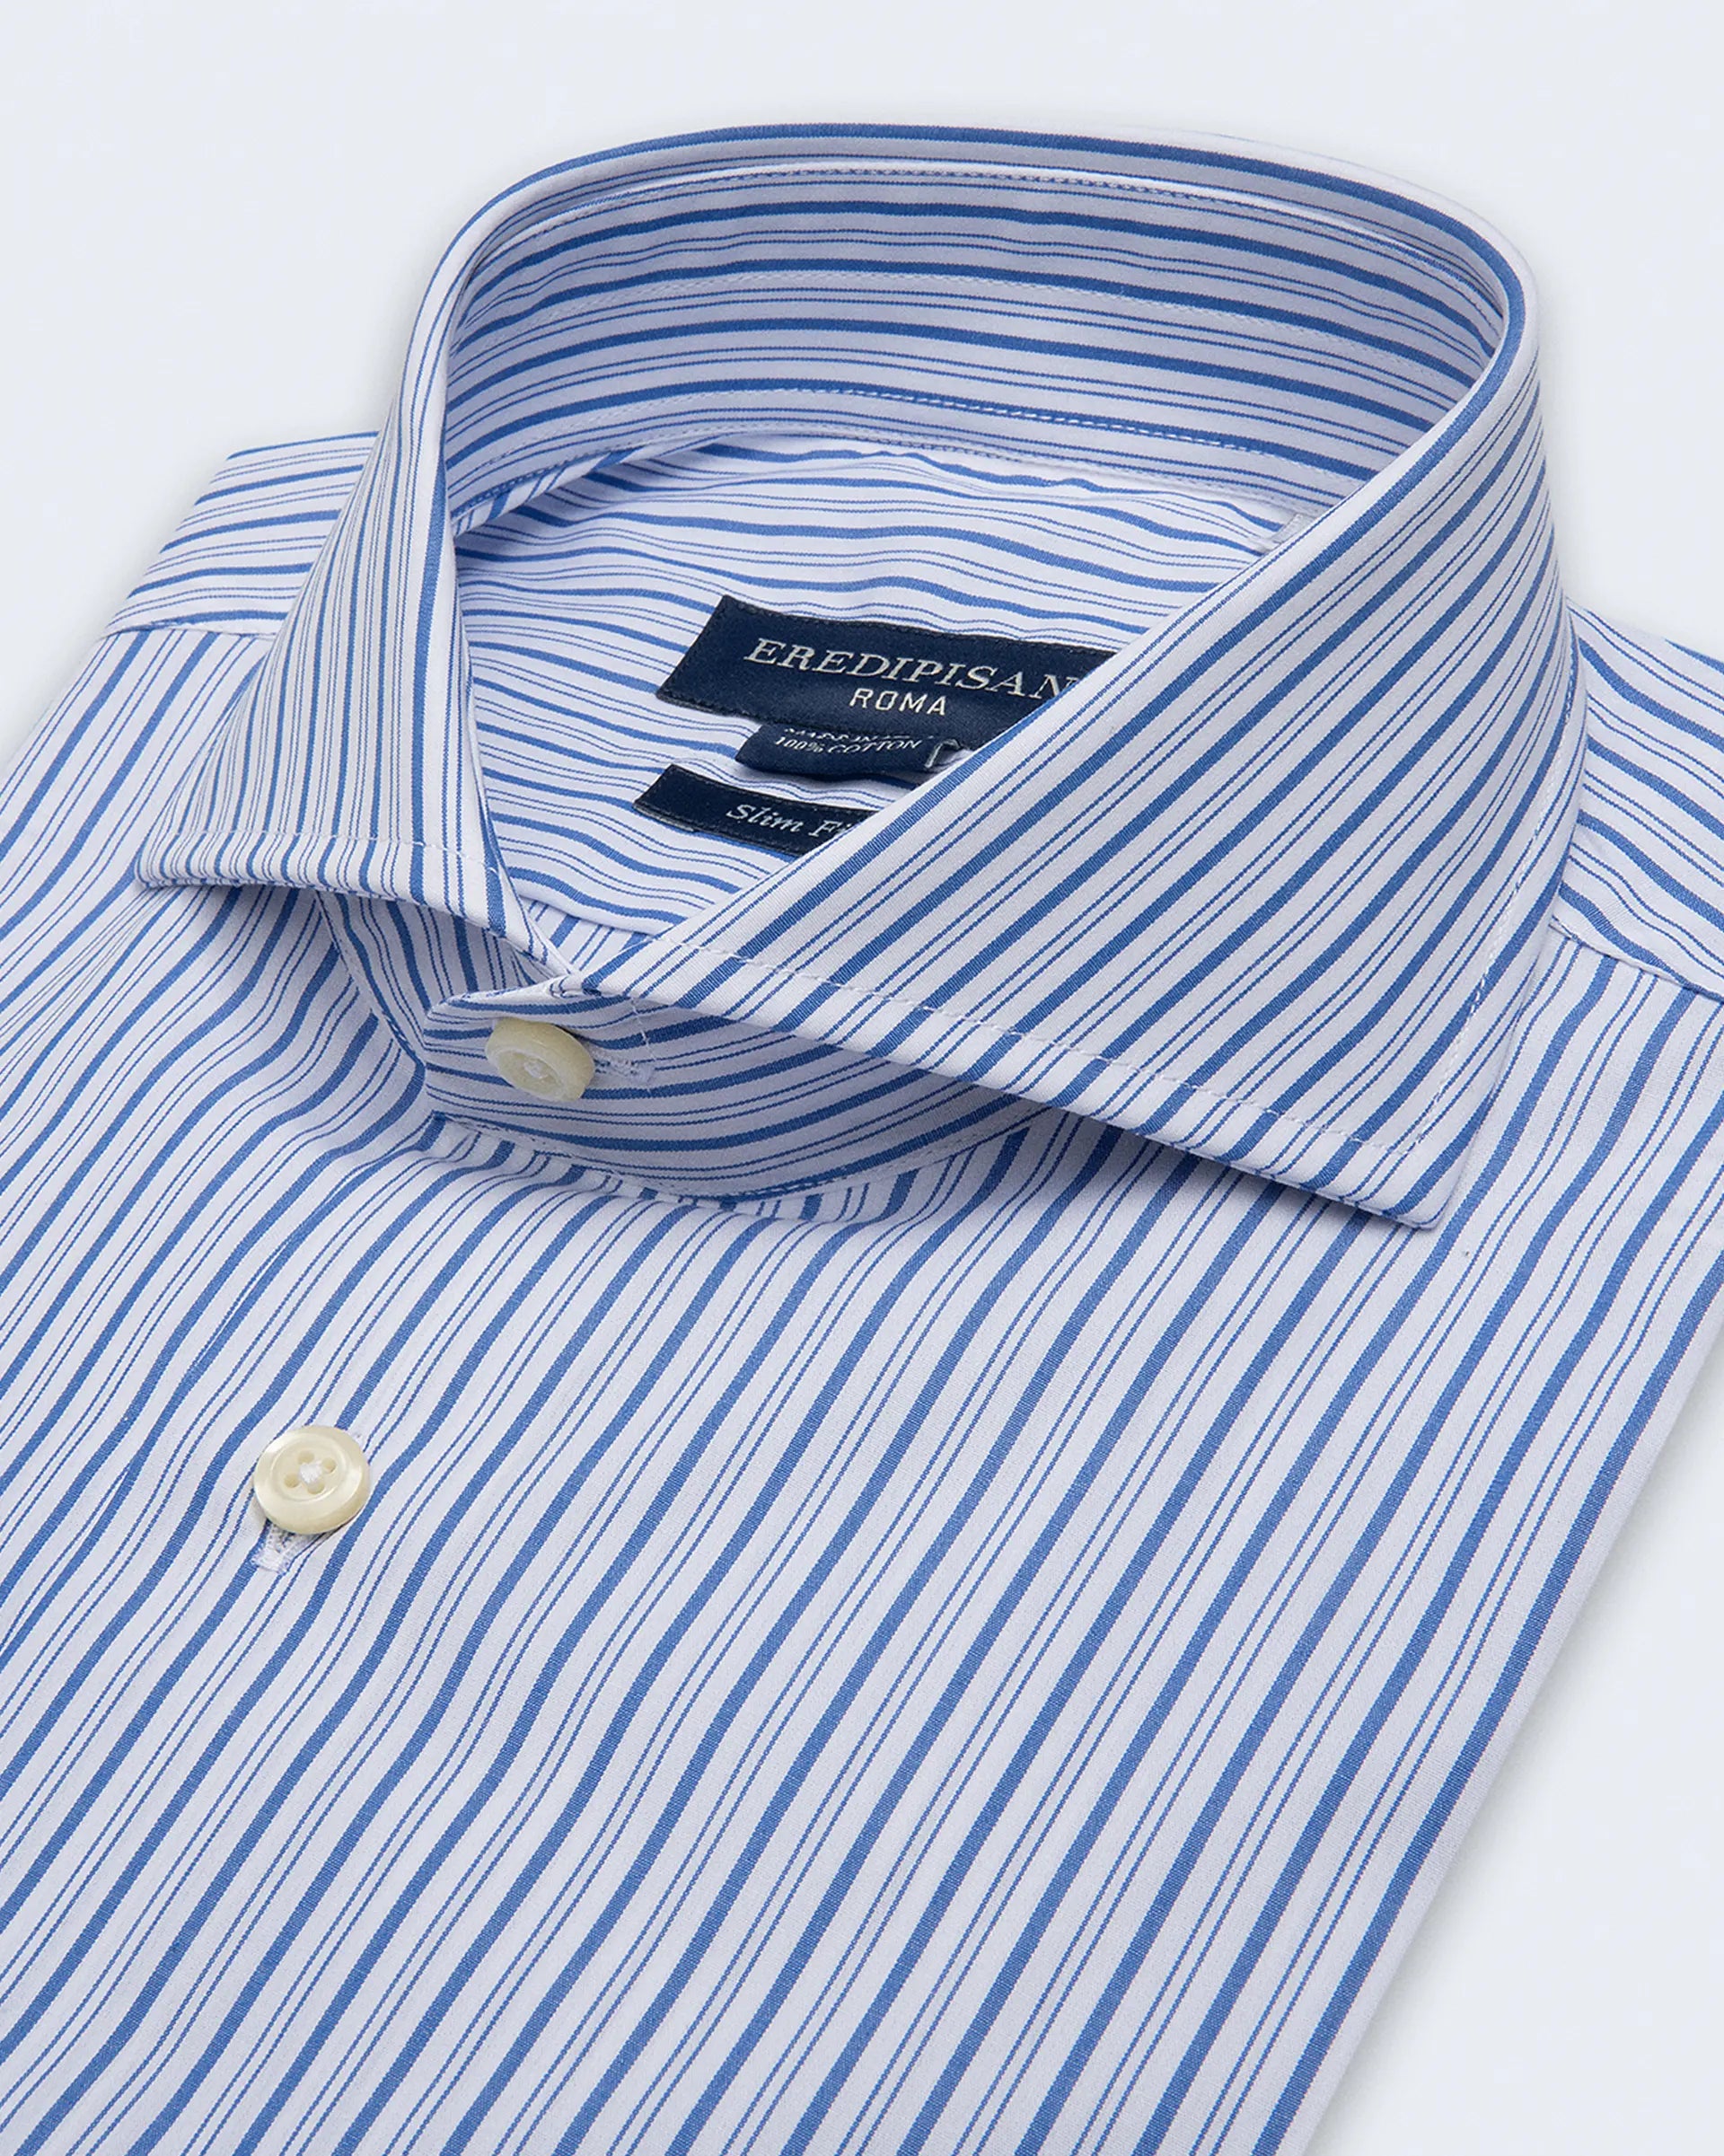 Light blue striped shirt in pure cotton, slim fit, Venice collar